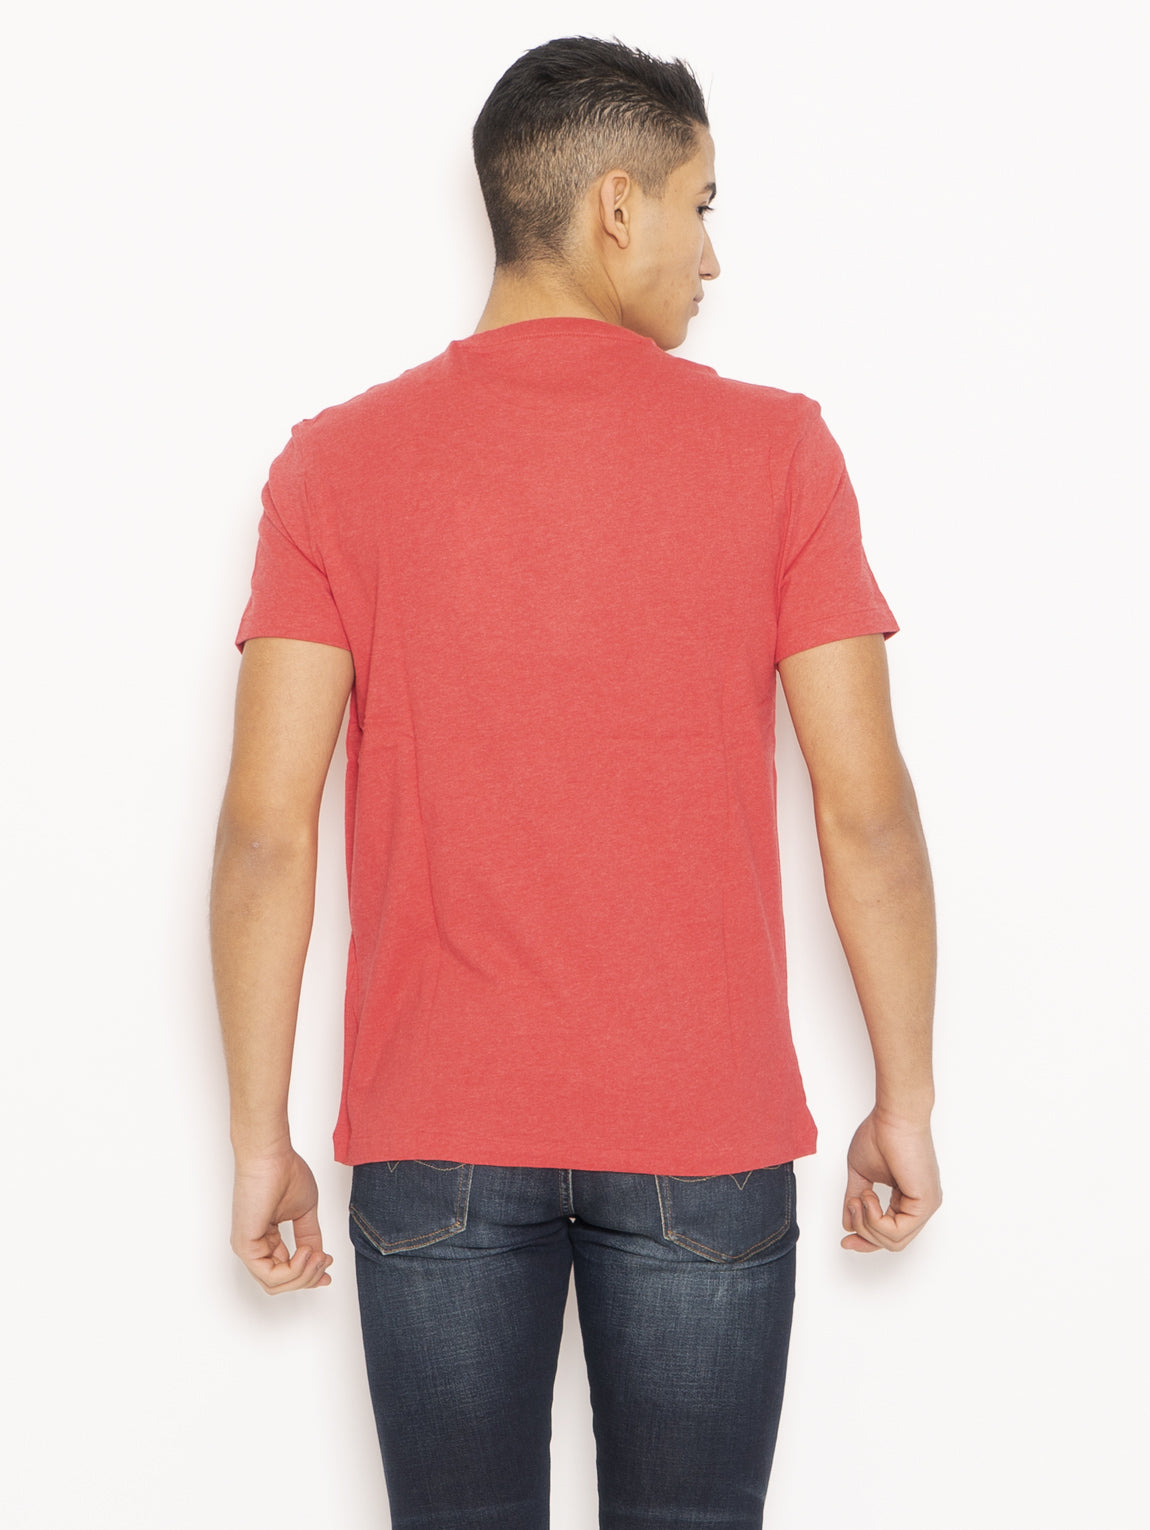 Rotes T-Shirt aus Baumwolle